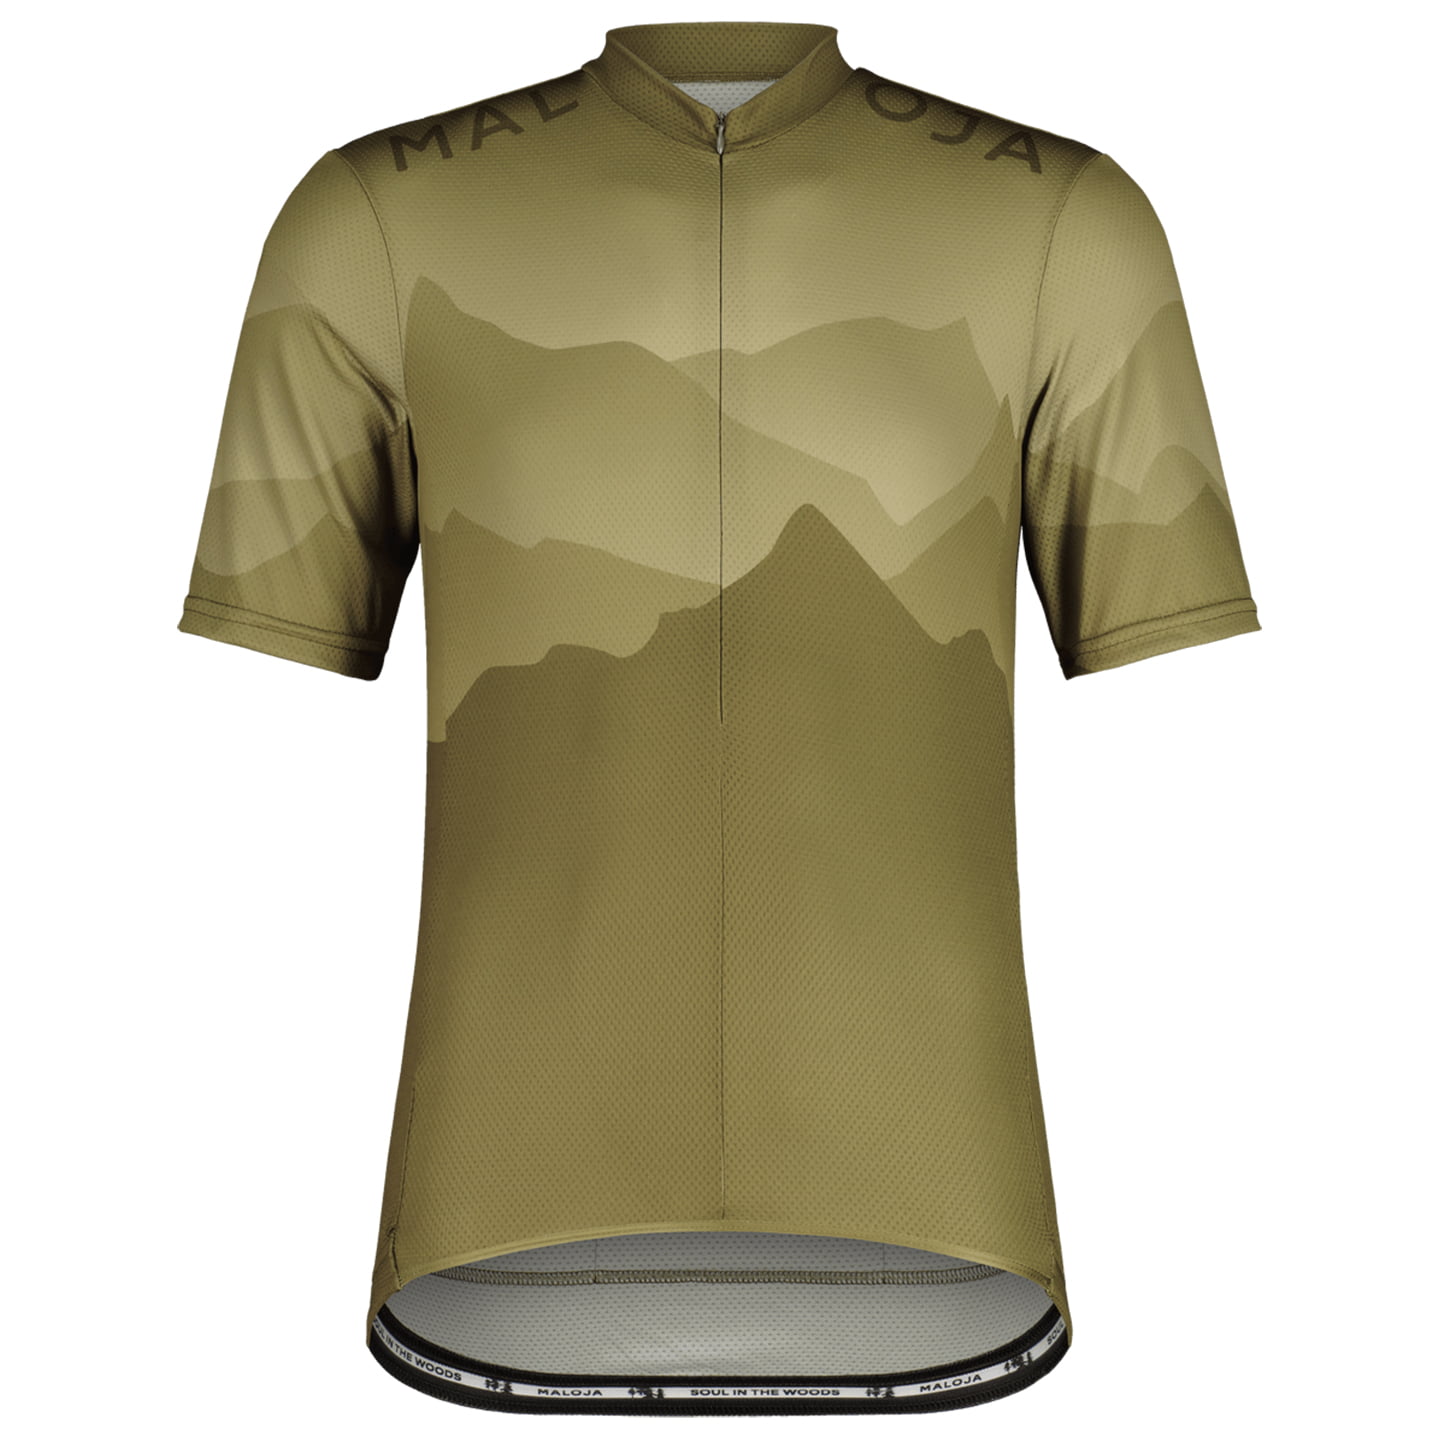 MALOJA PinzagenM. Short Sleeve Jersey Short Sleeve Jersey, for men, size L, Cycling jersey, Cycling clothing